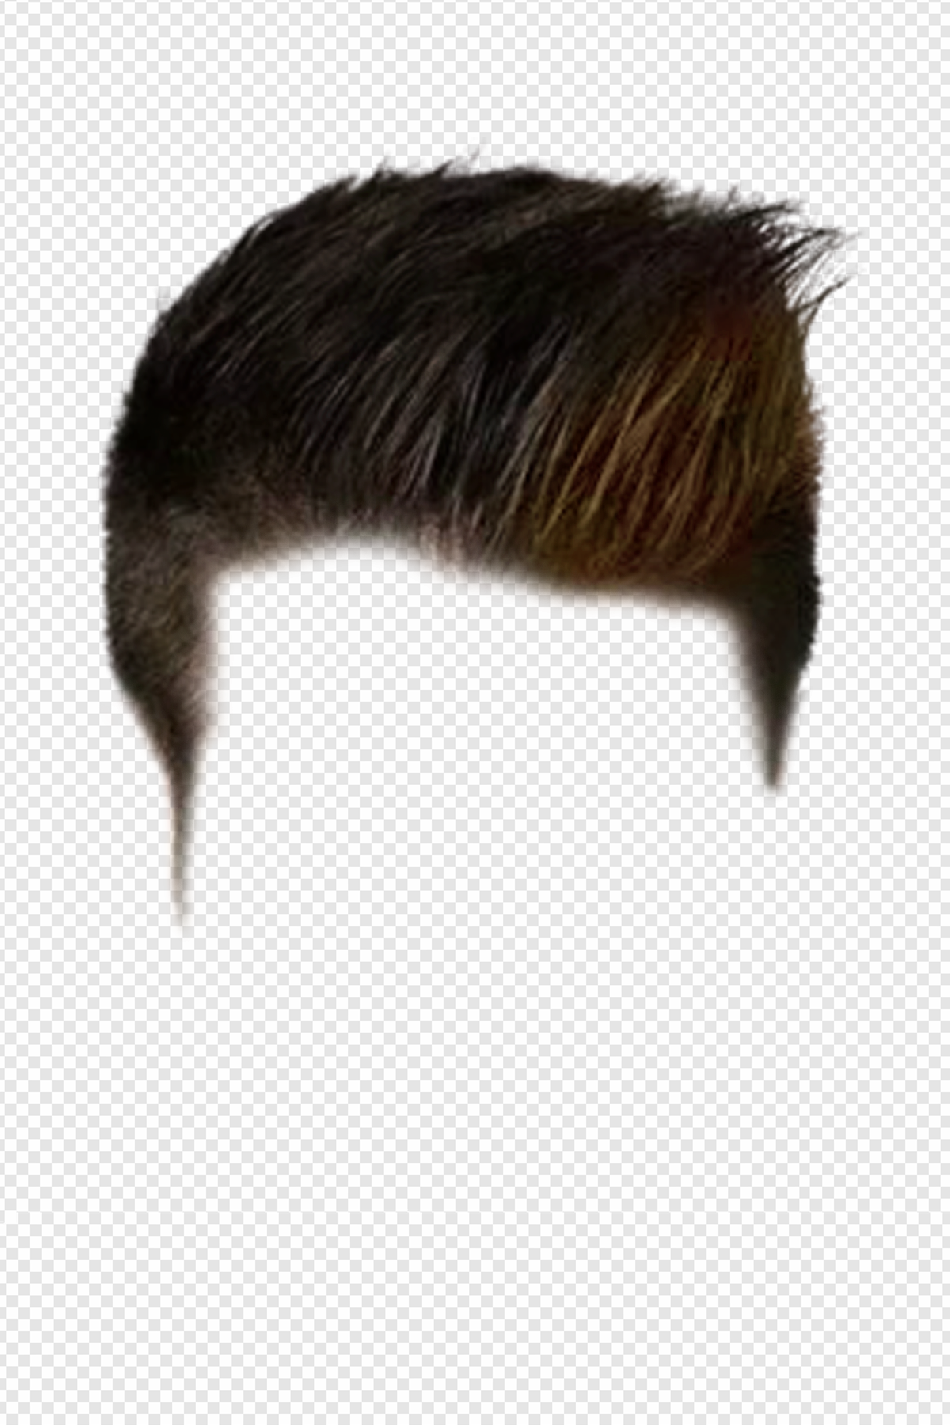 Hair PNG Transparent Images Download - PNG Packs